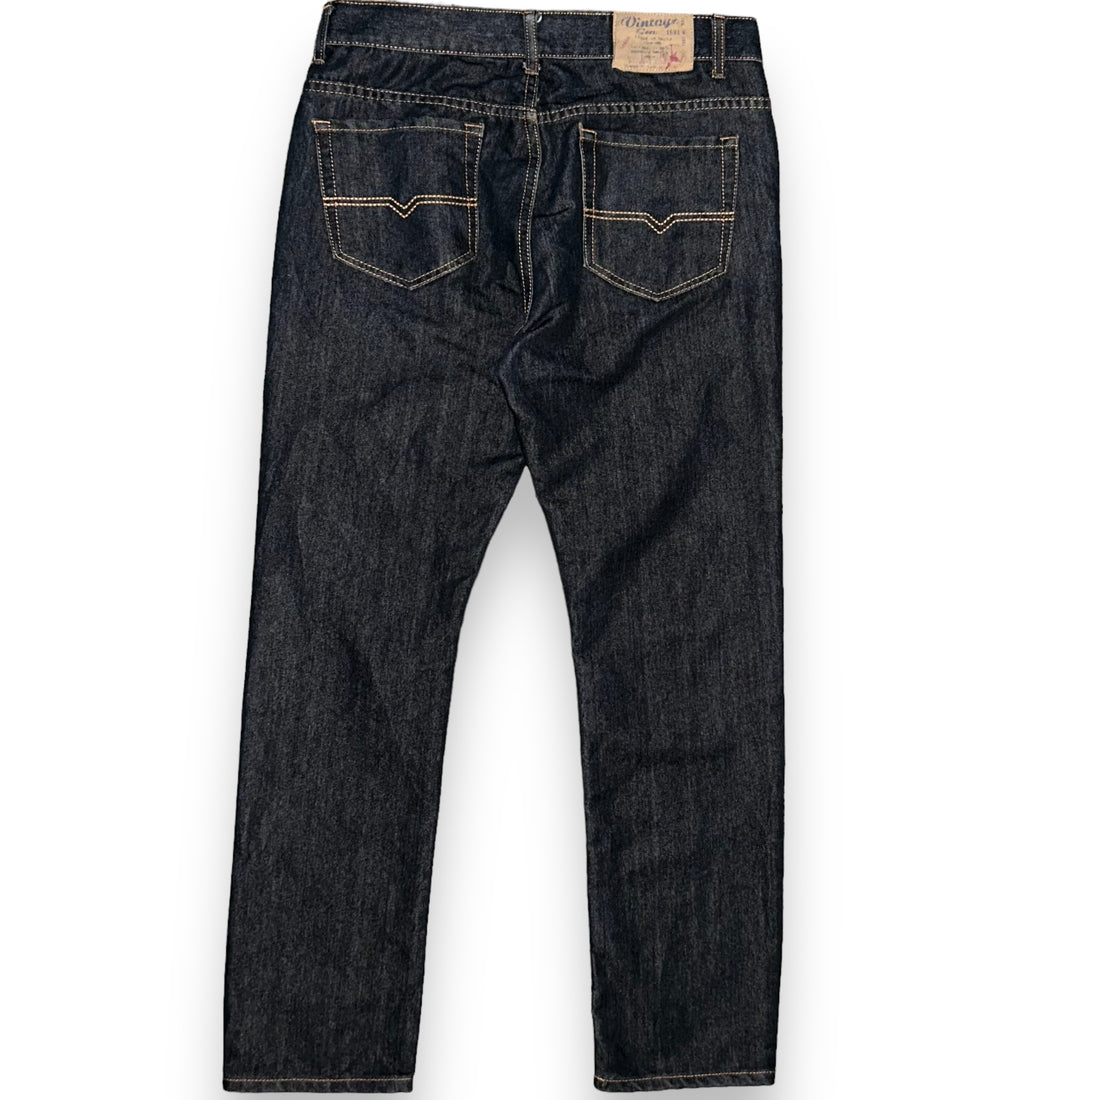 Jeans Vintage Genes  (32 USA  M)